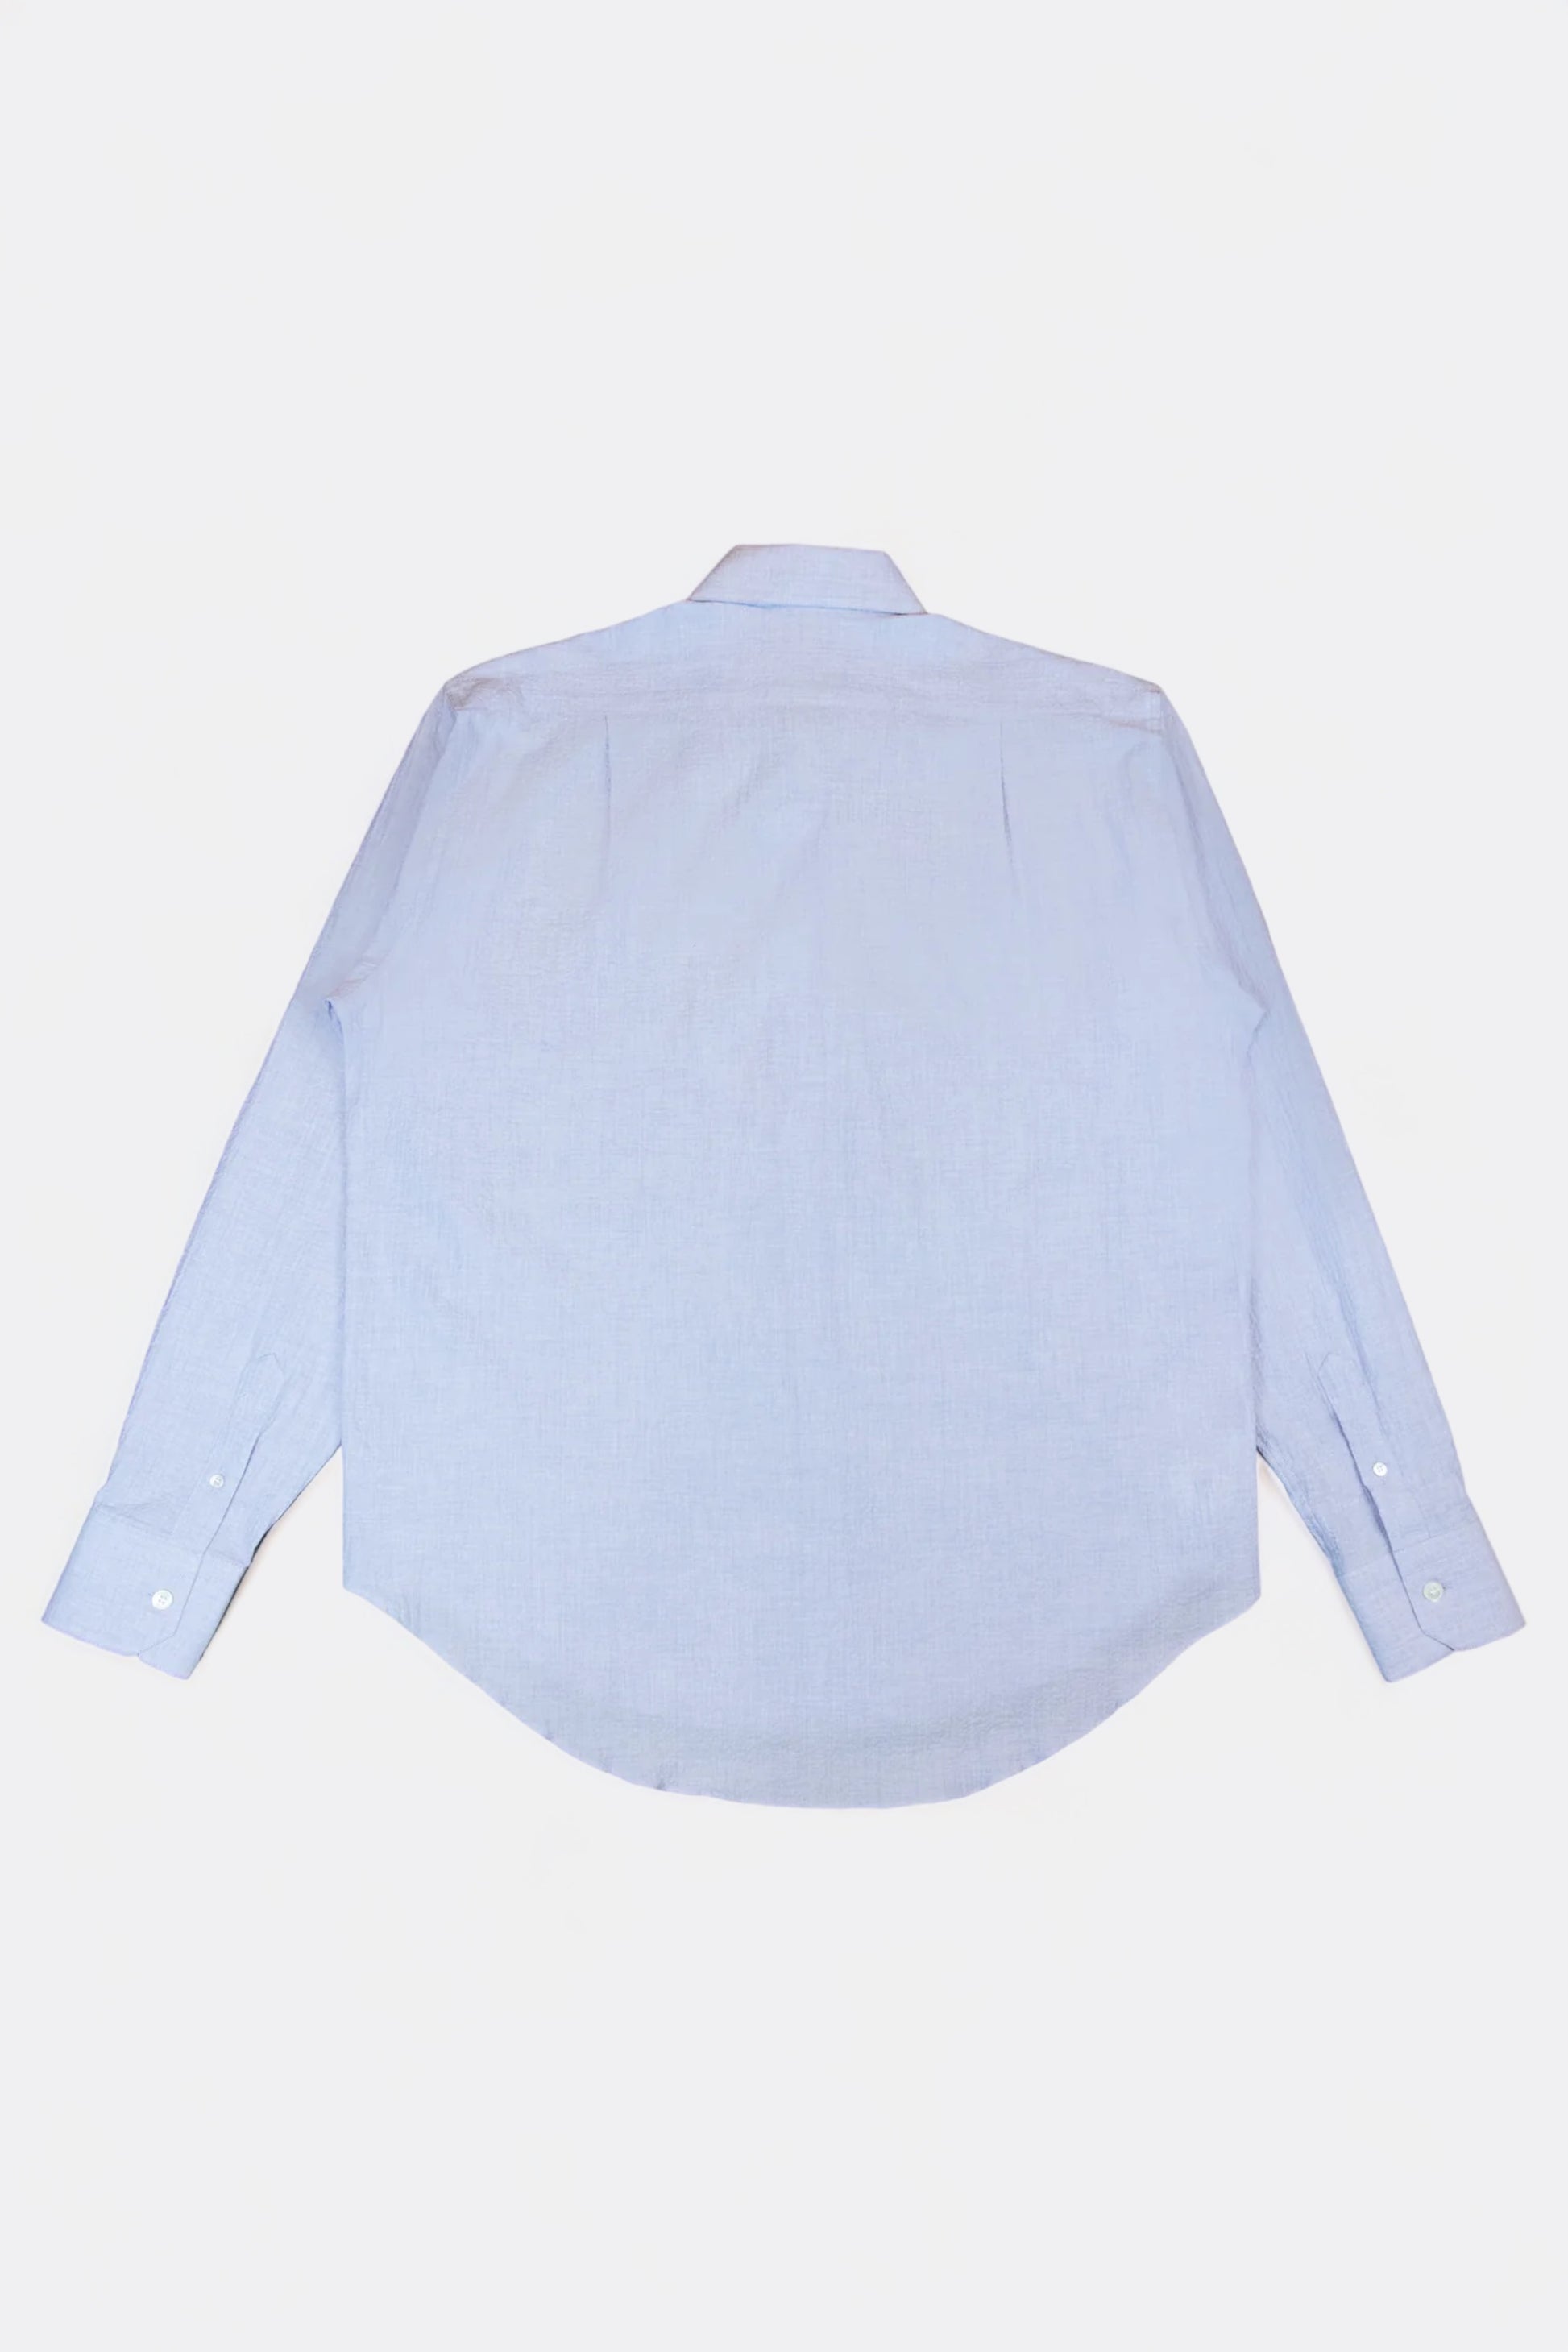 Camisas Manolo - Normal Shirt (Blue Seersucker)